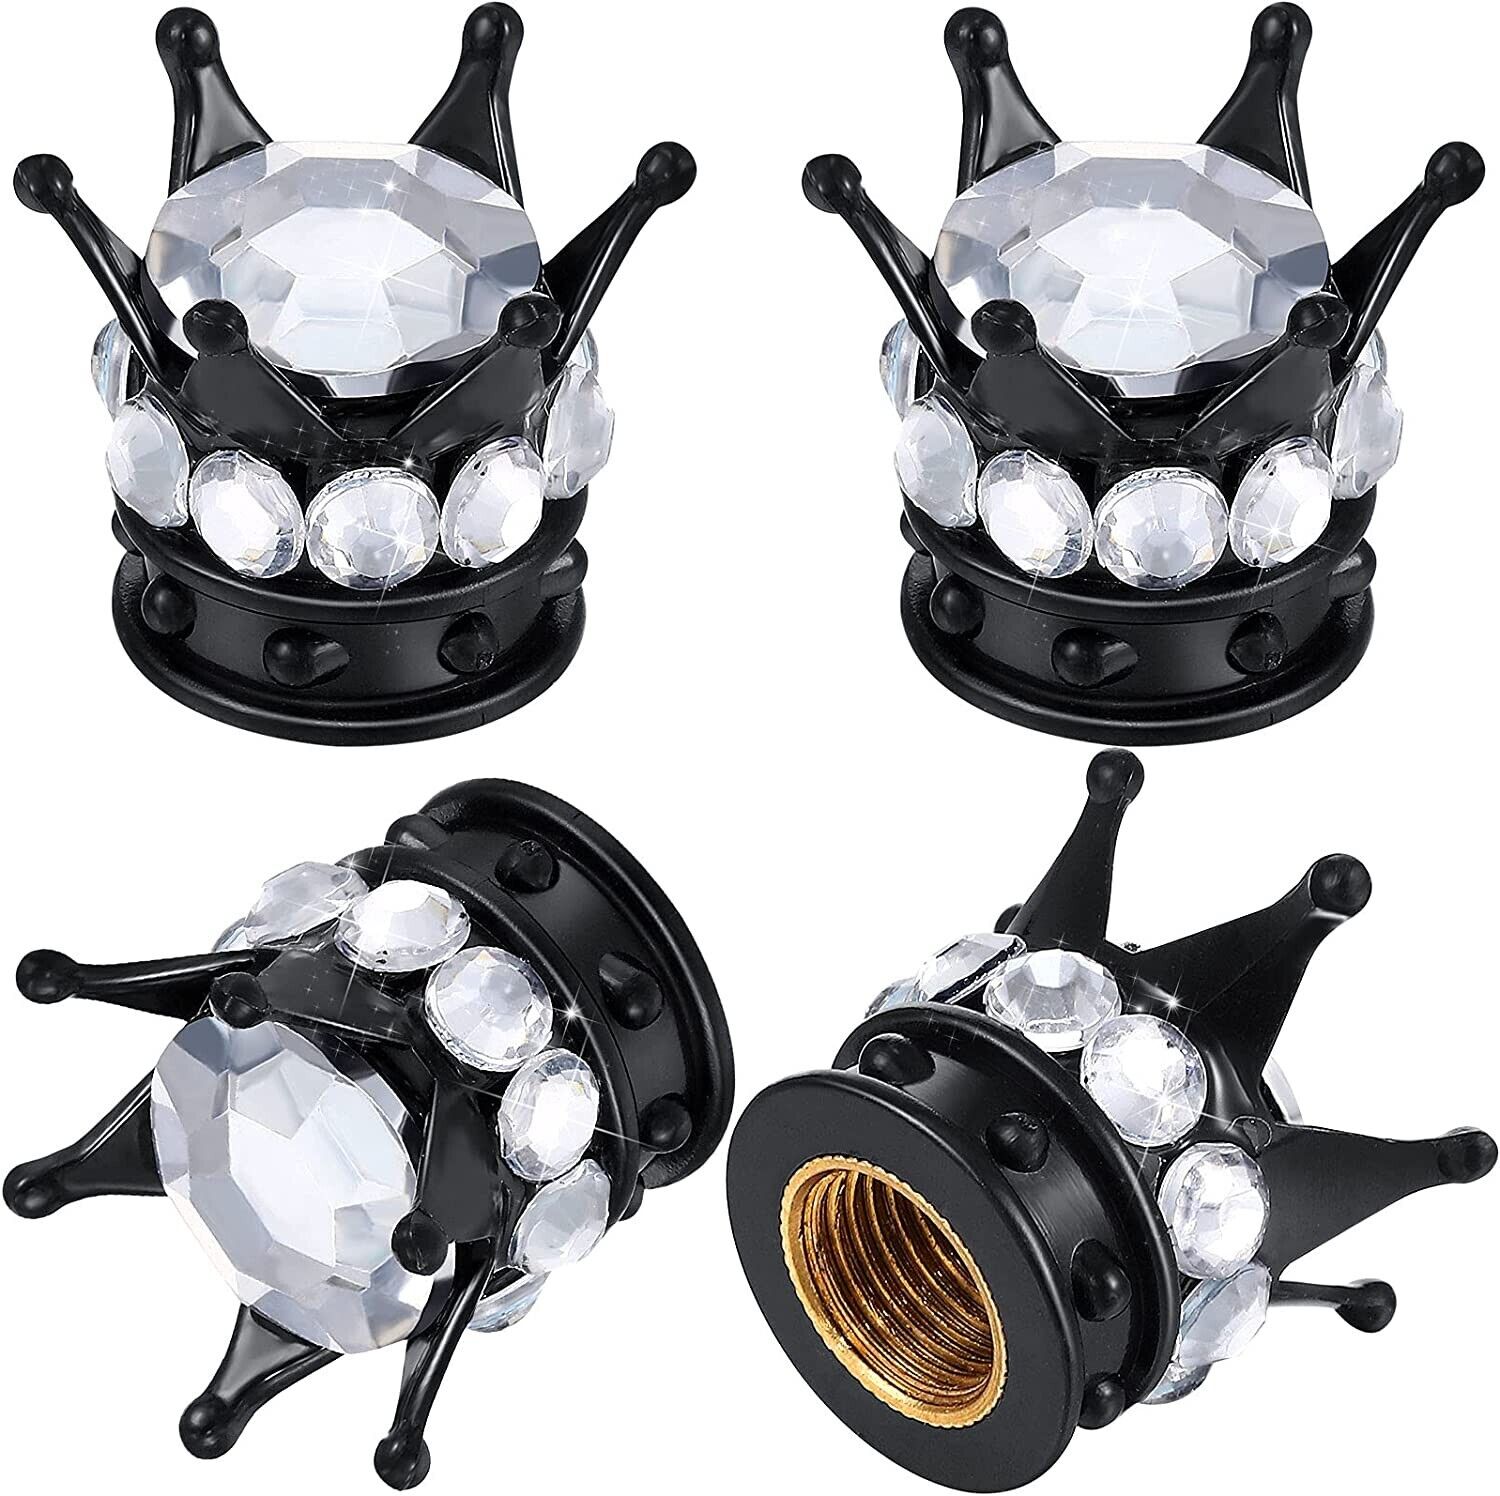 Black White Rhinestone Crystal Crown Tire Valve Stem Caps Covers Fits Universal